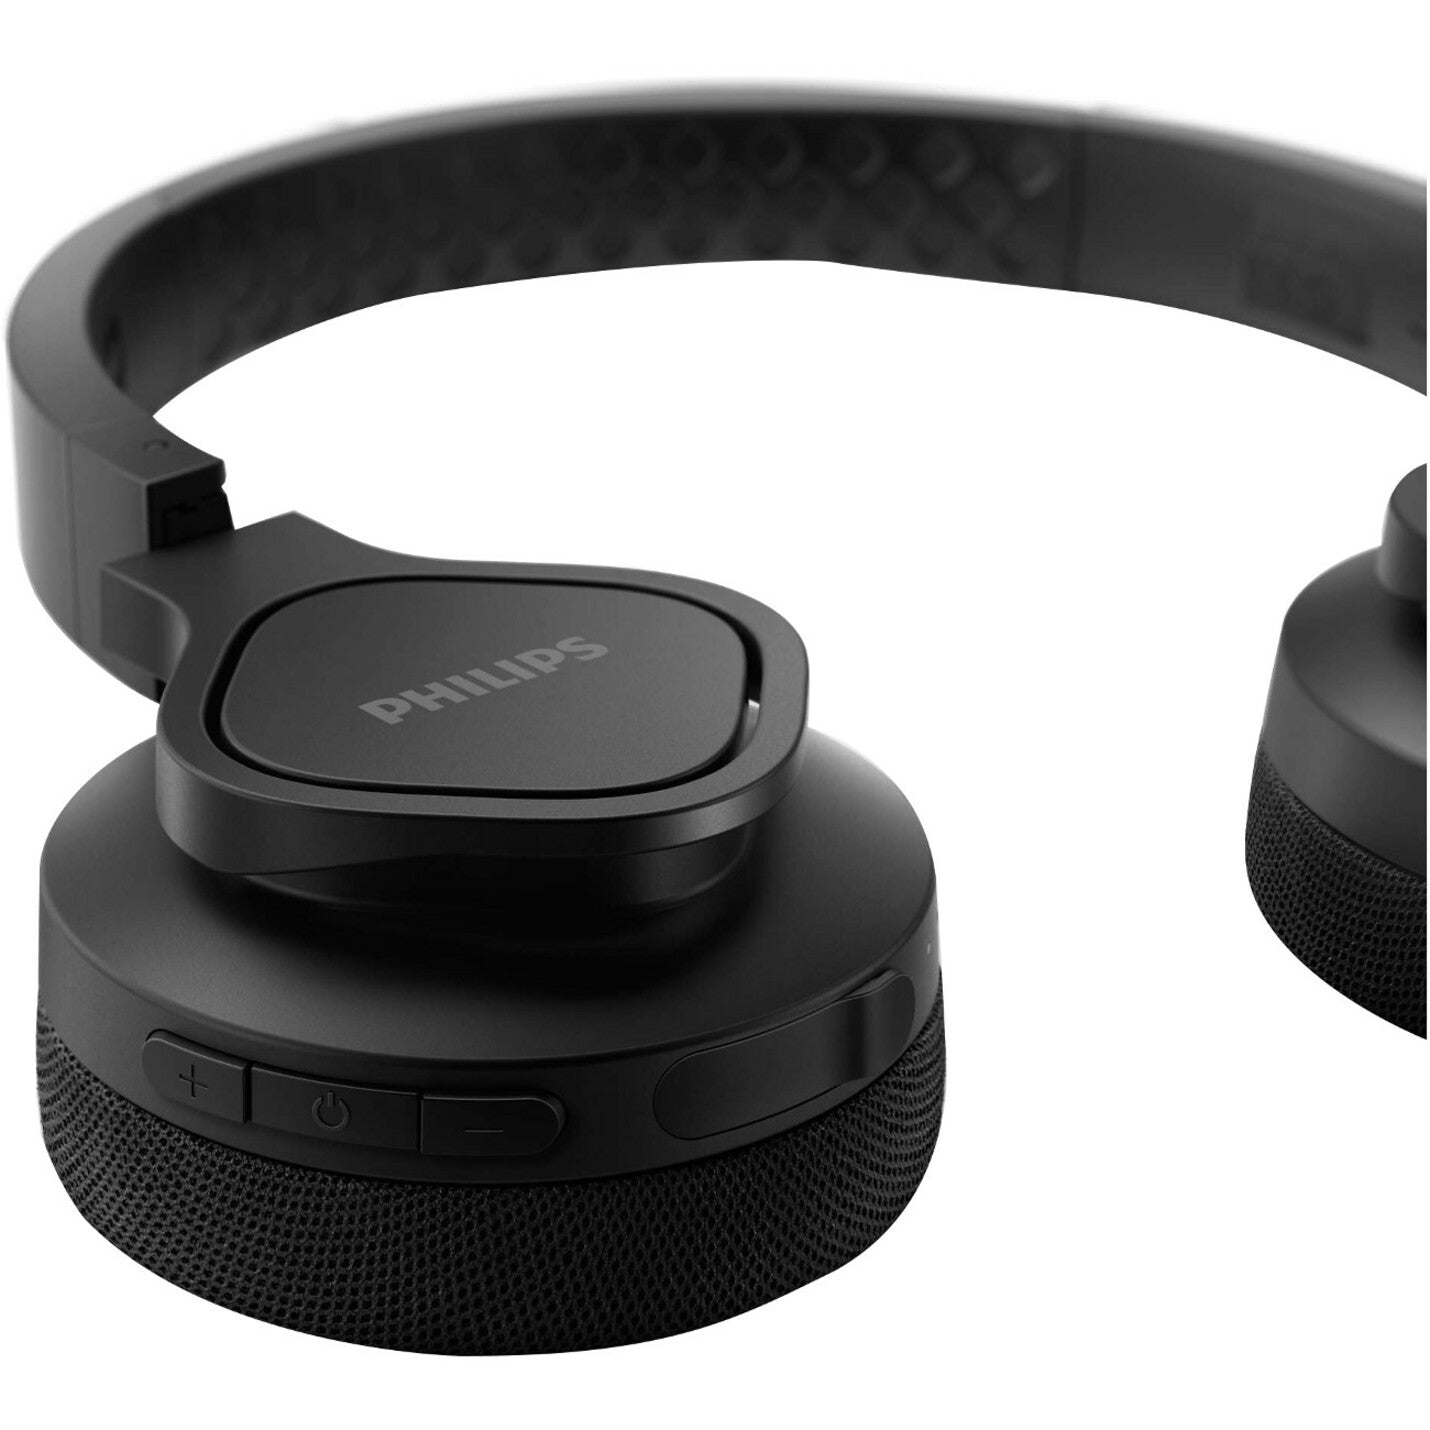 Philips TAA4216BK/00 Go Headset On-ear Wireless Sports Headphones IP55 Rechargeable Battery